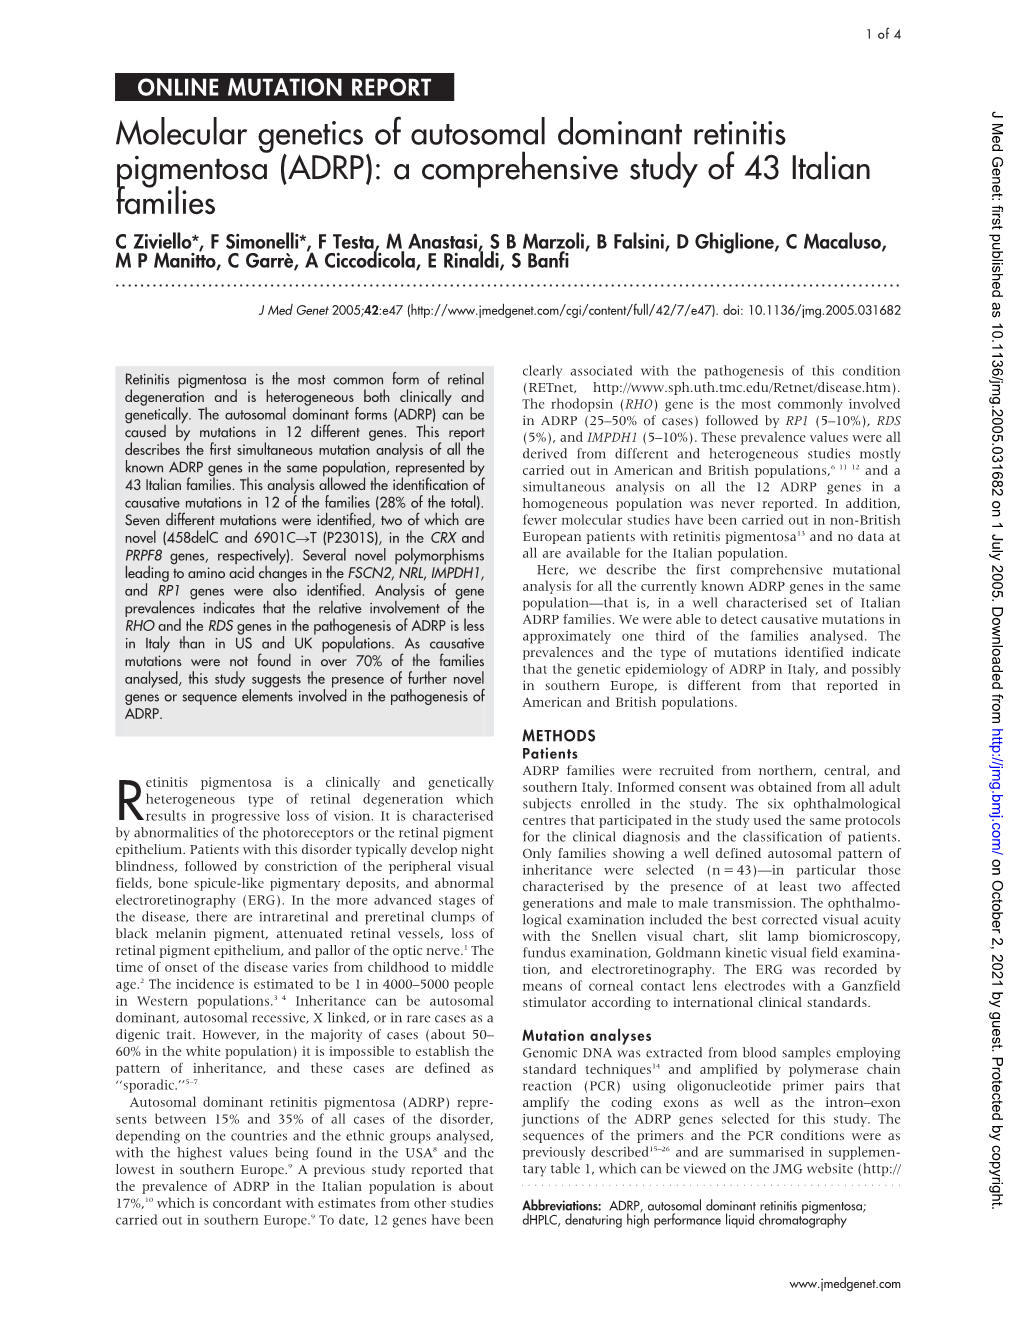 Molecular Genetics of Autosomal Dominant Retinitis Pigmentosa (ADRP): a Comprehensive Study of 43 Italian Families